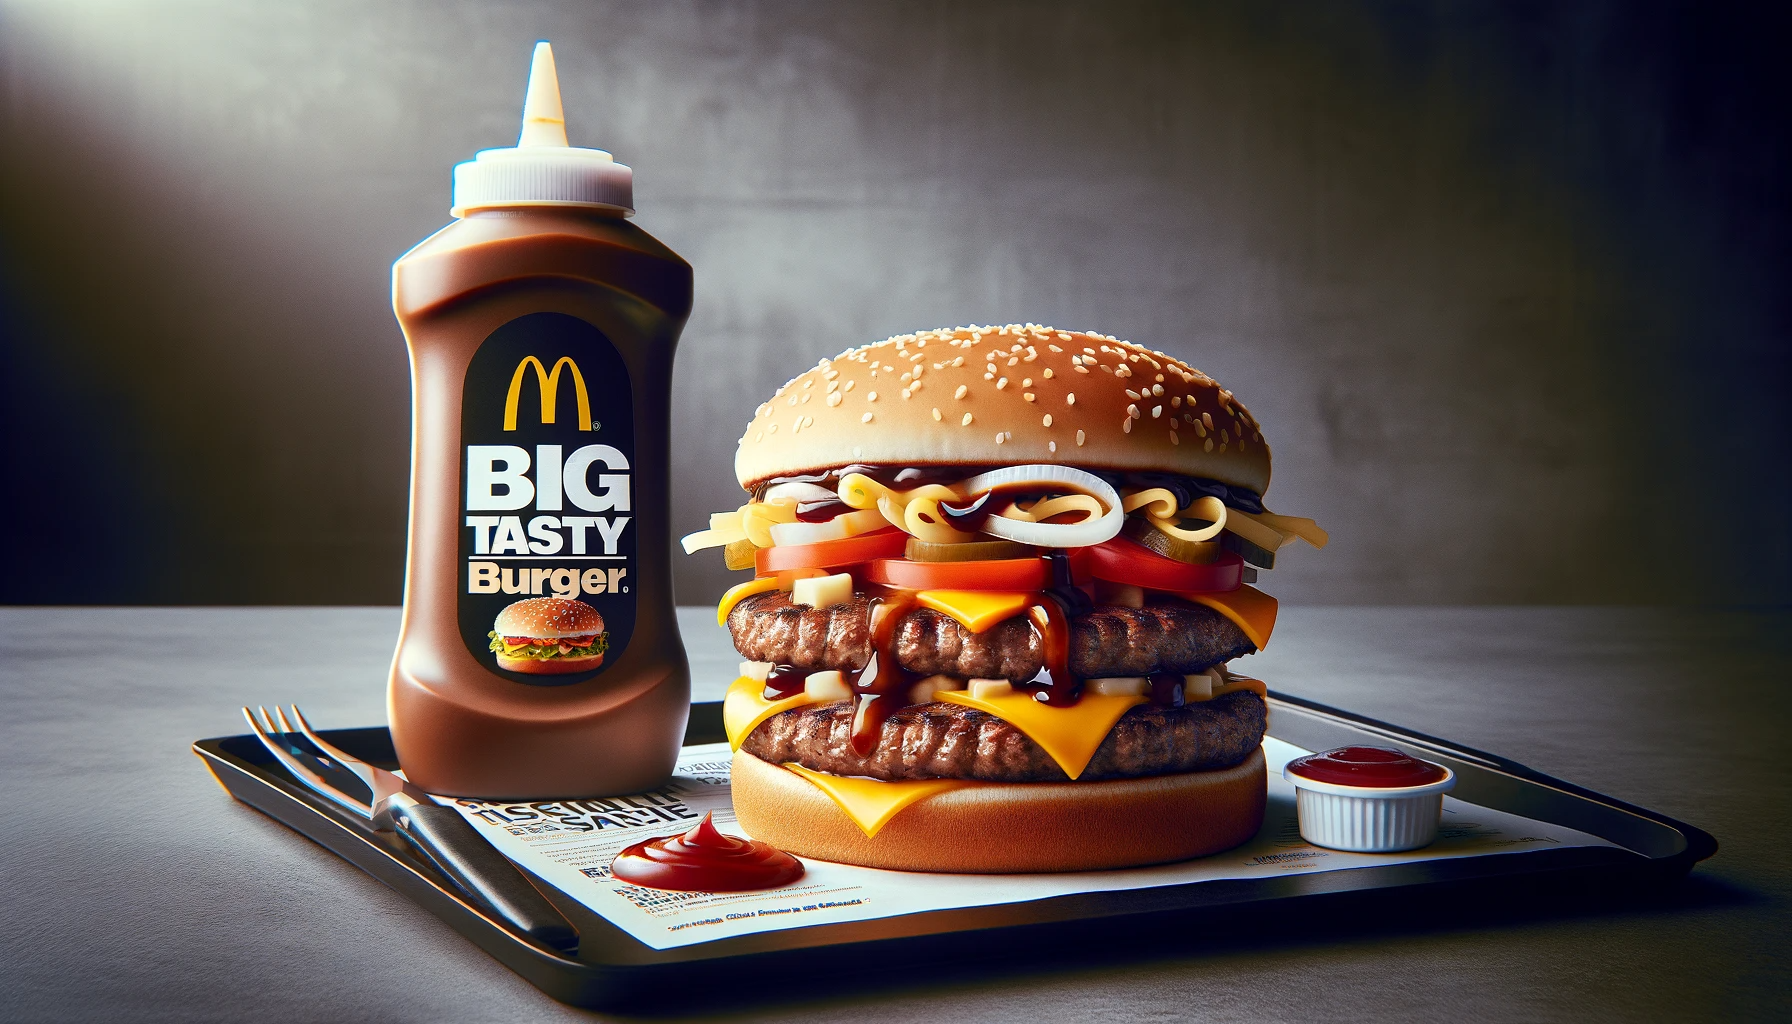 McDonalds Big Tasty Burger